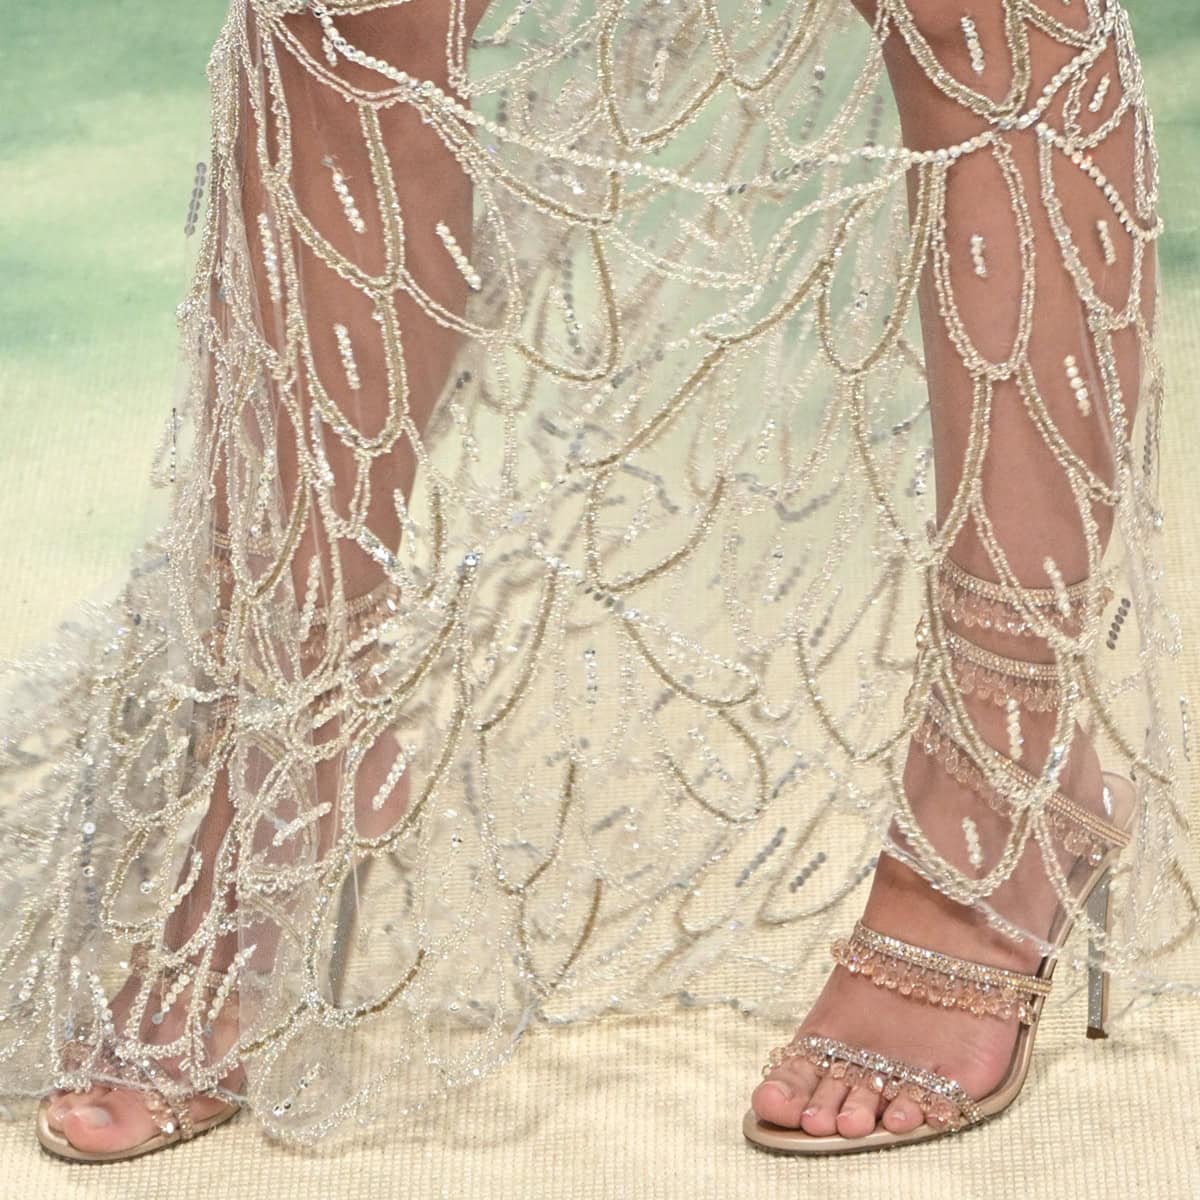 Emily Ratajkowski complements her striking gown with René Caovilla Chandelier stiletto sandals